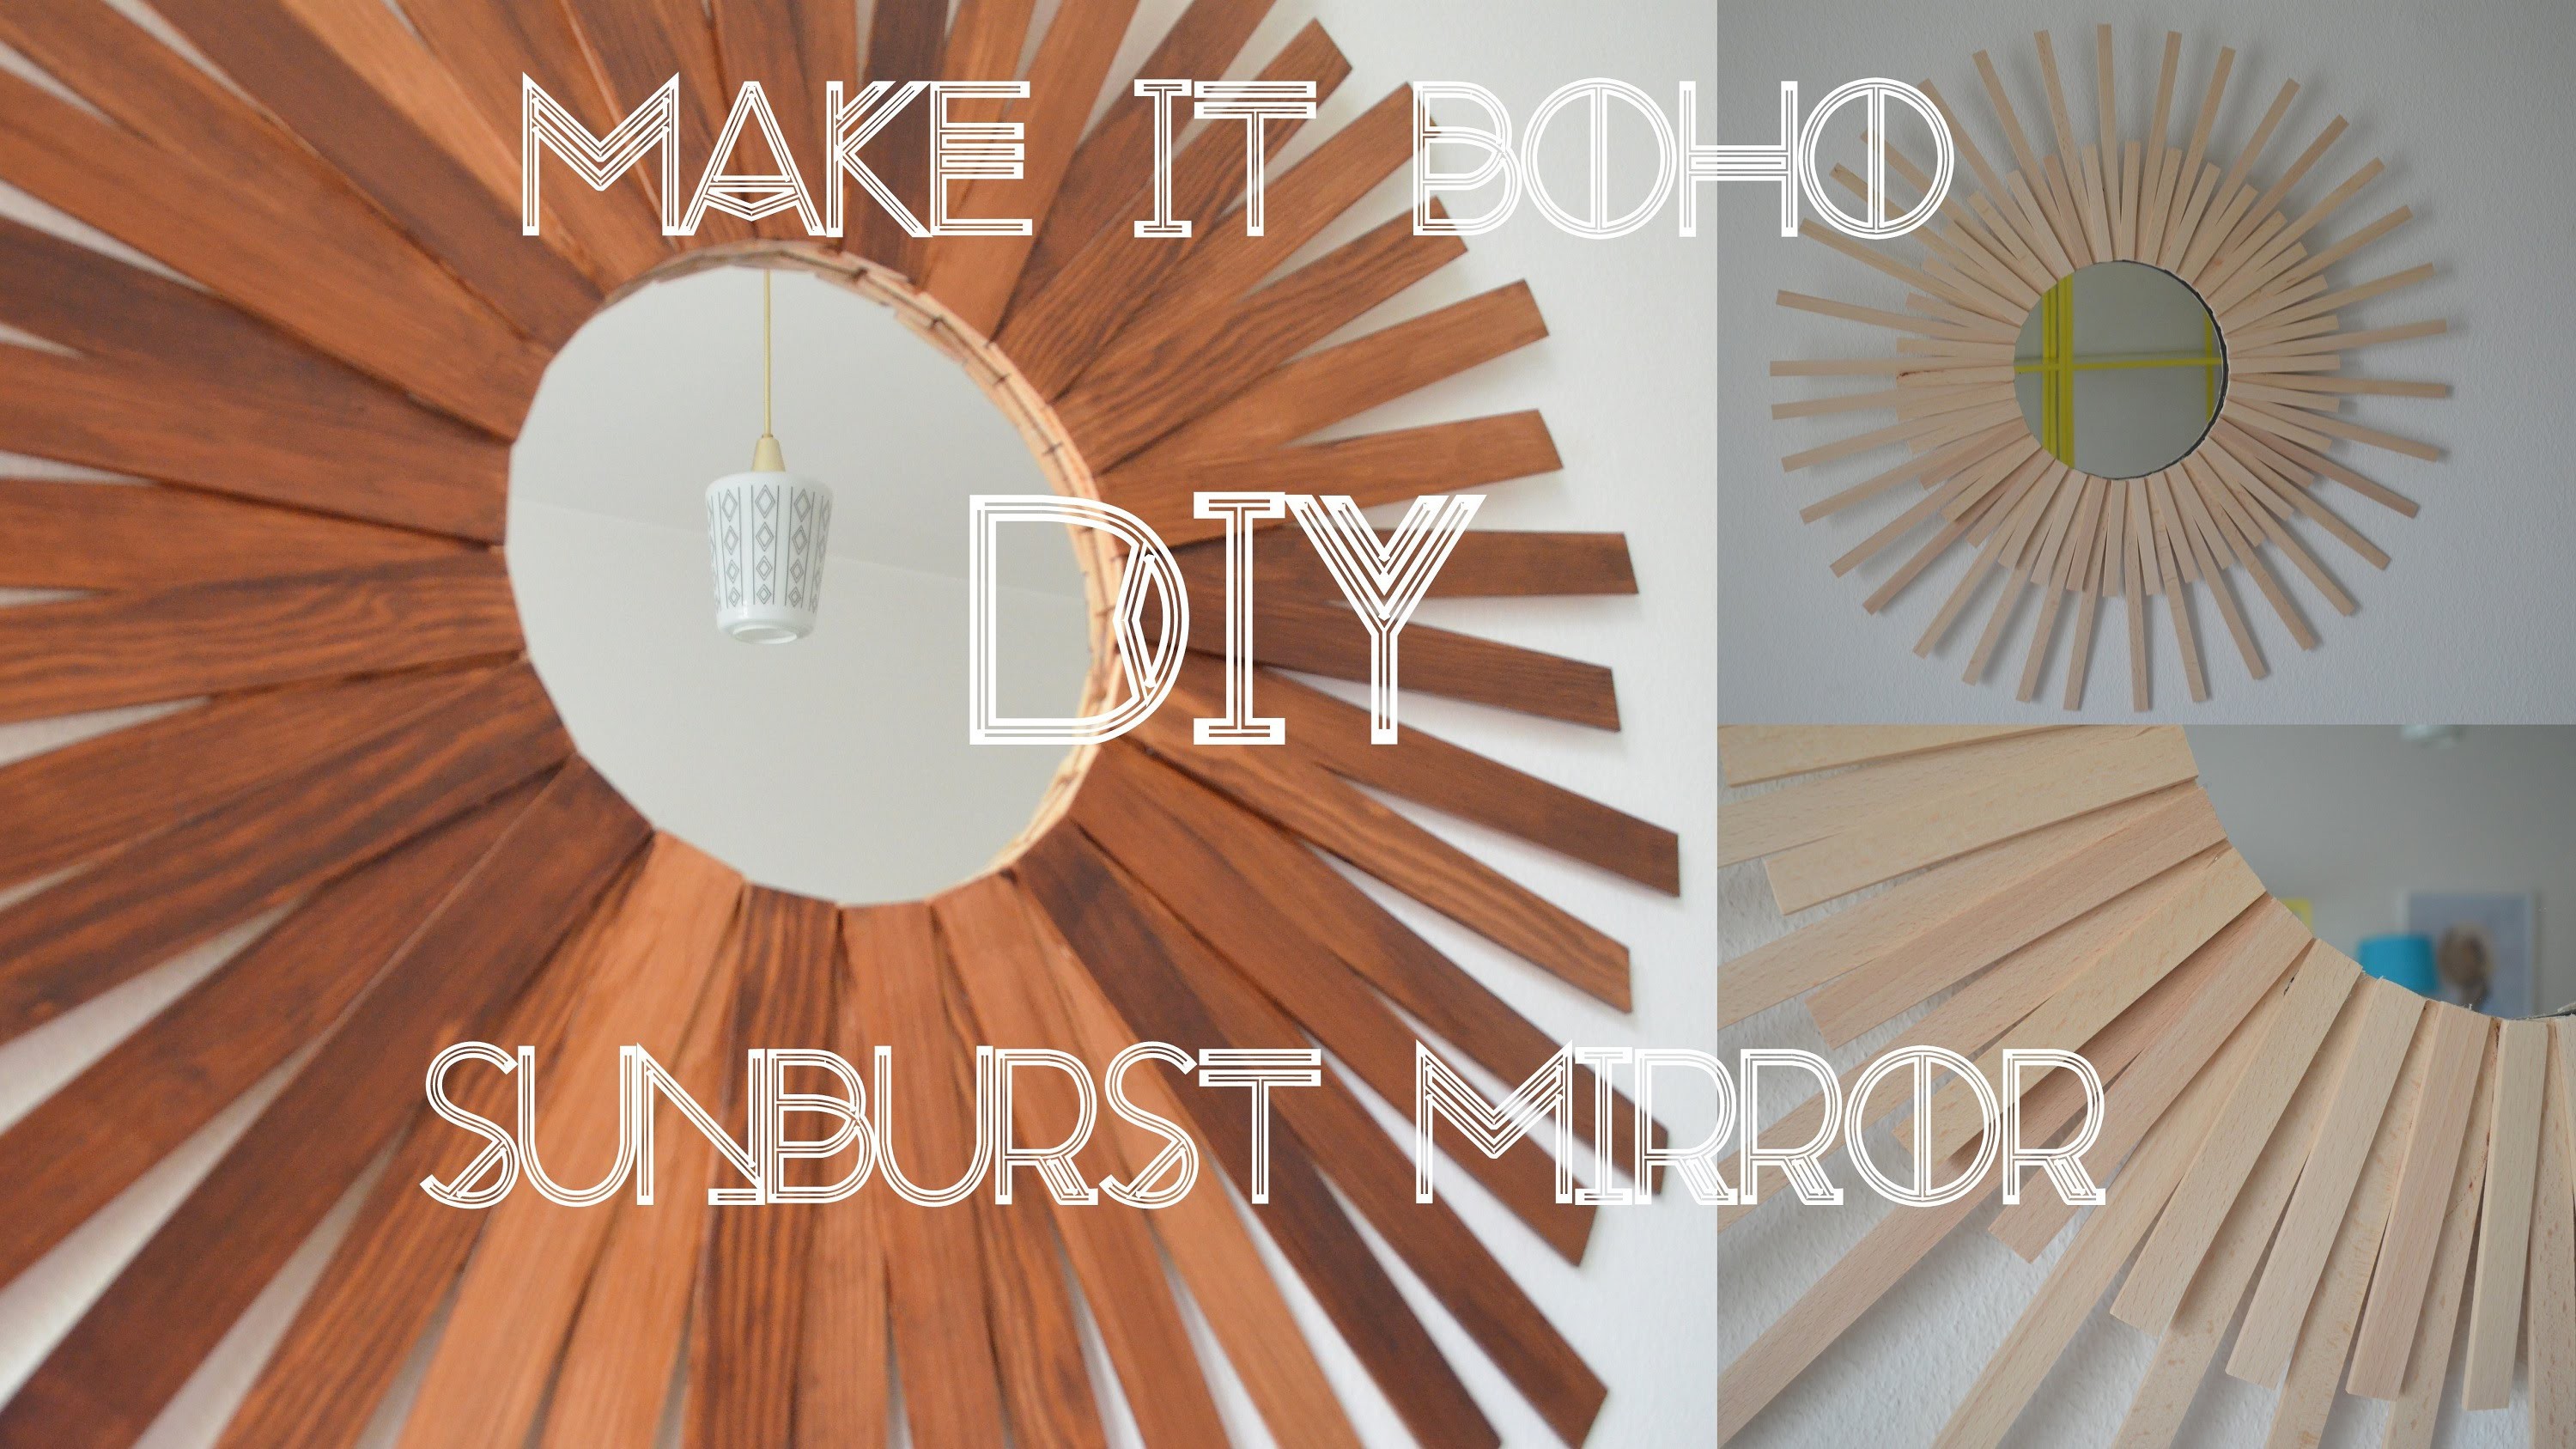 DIY Sunburst Mirror Sonnenspiegel - MAKE IT BOHO